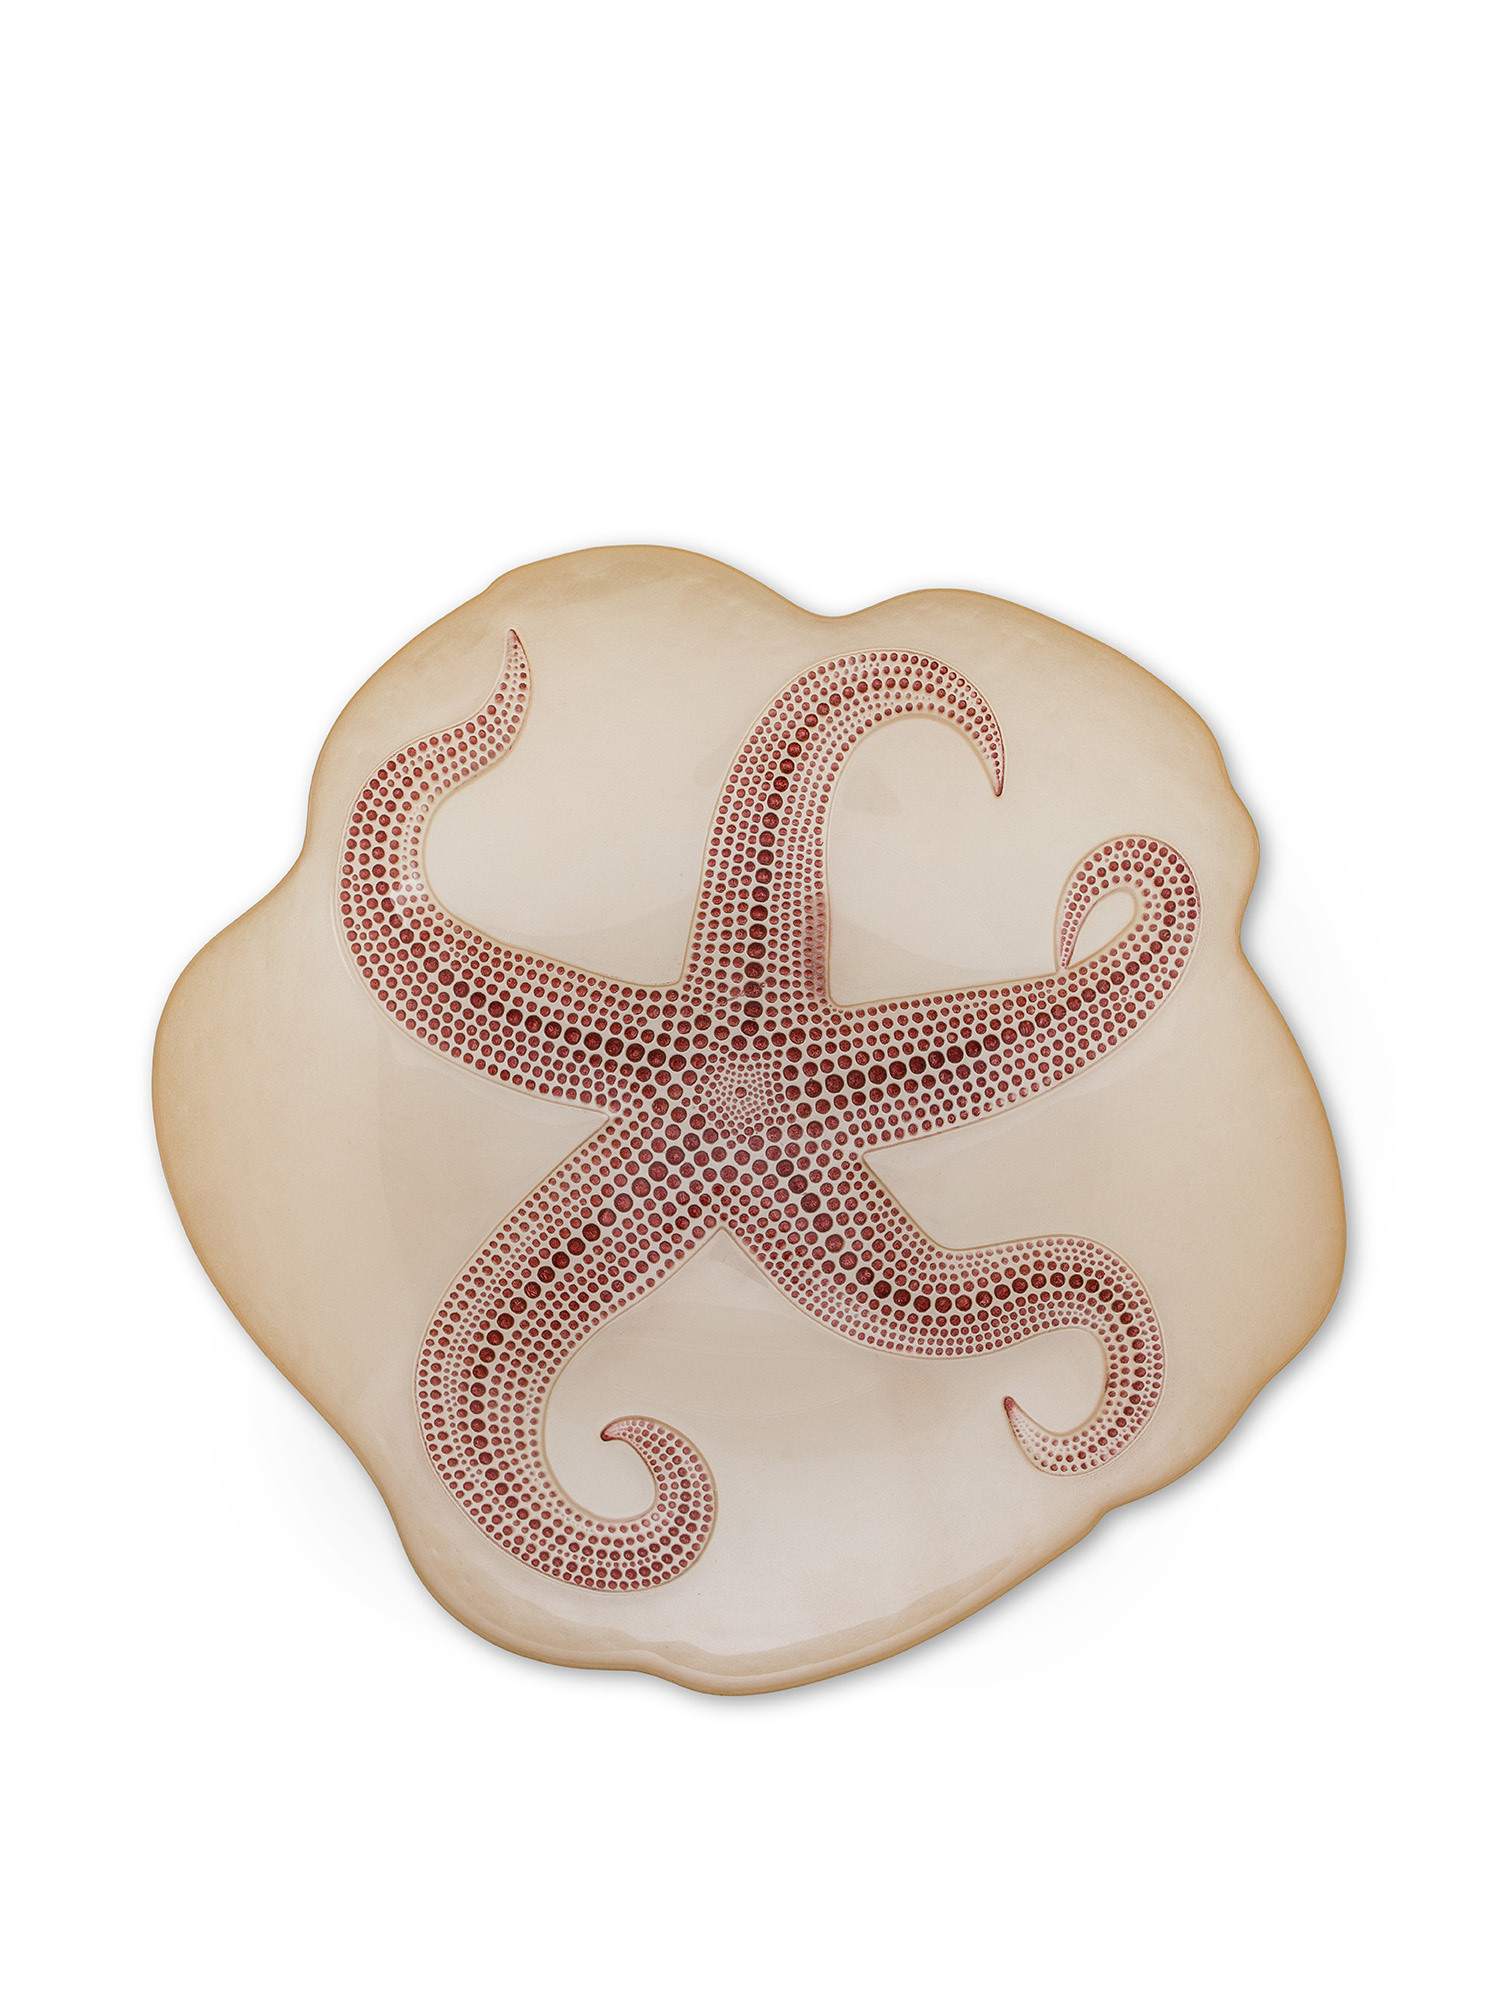 Octopus motif glass centrepiece, Sand, large image number 1